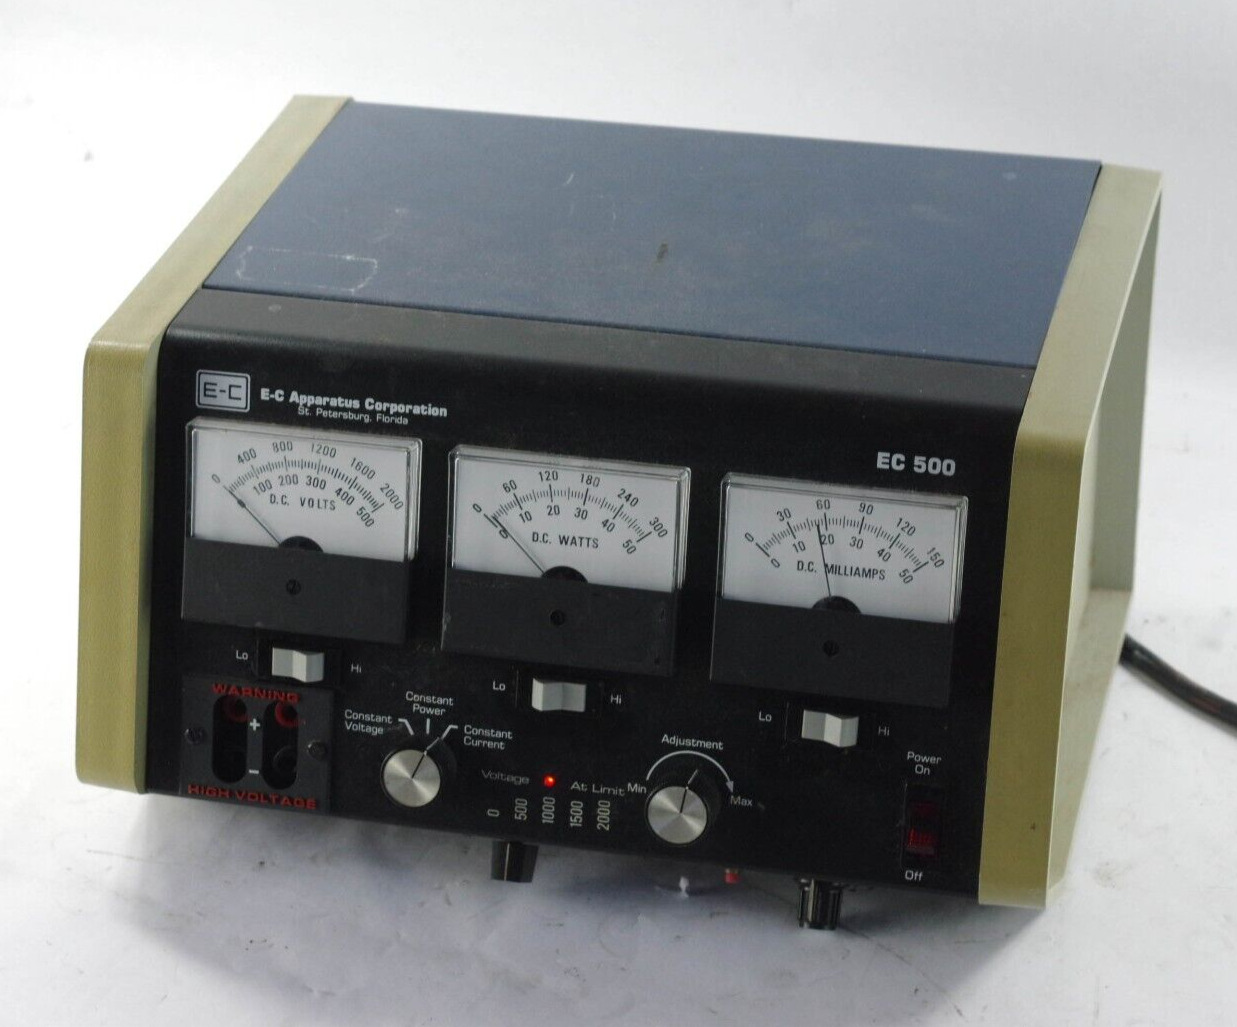 E-C APPARATUS EC-500 ELECTROPHORESIS POWER SUPPLY - Untested